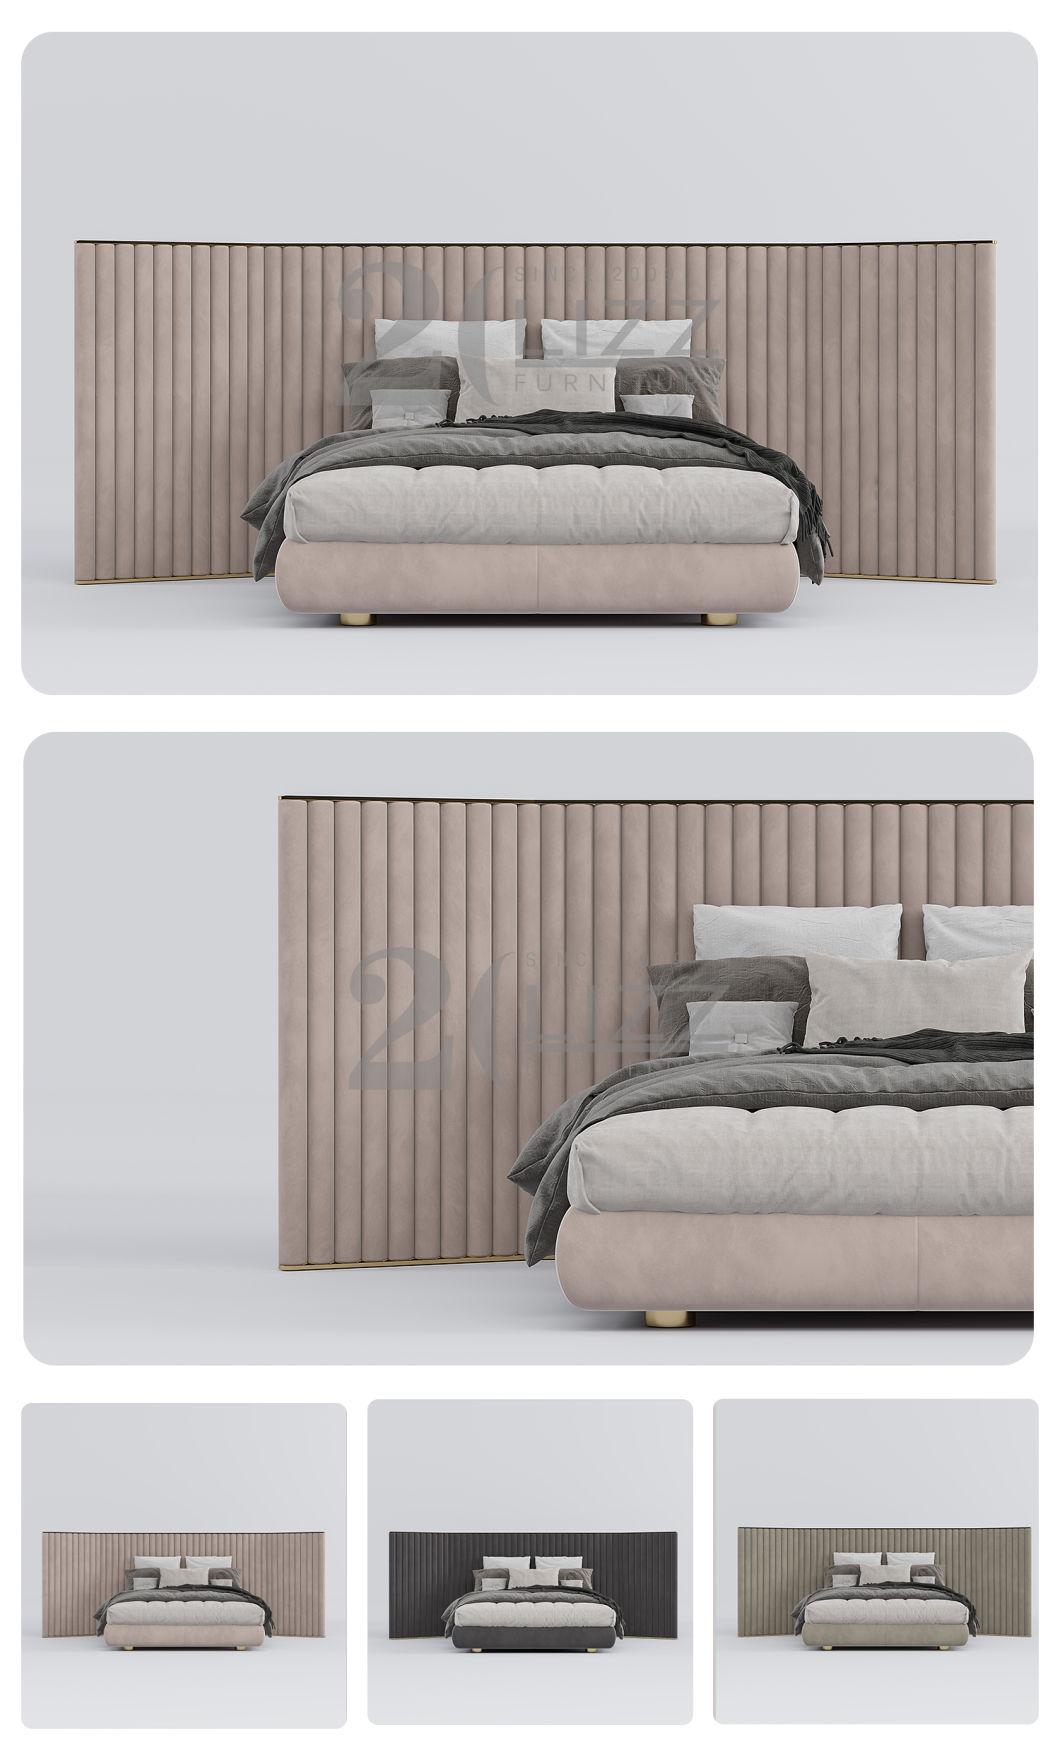 2022 Hot Selling Wooden Home Bedroom Furniture Luxury Foam Mattress Bed with Headboard